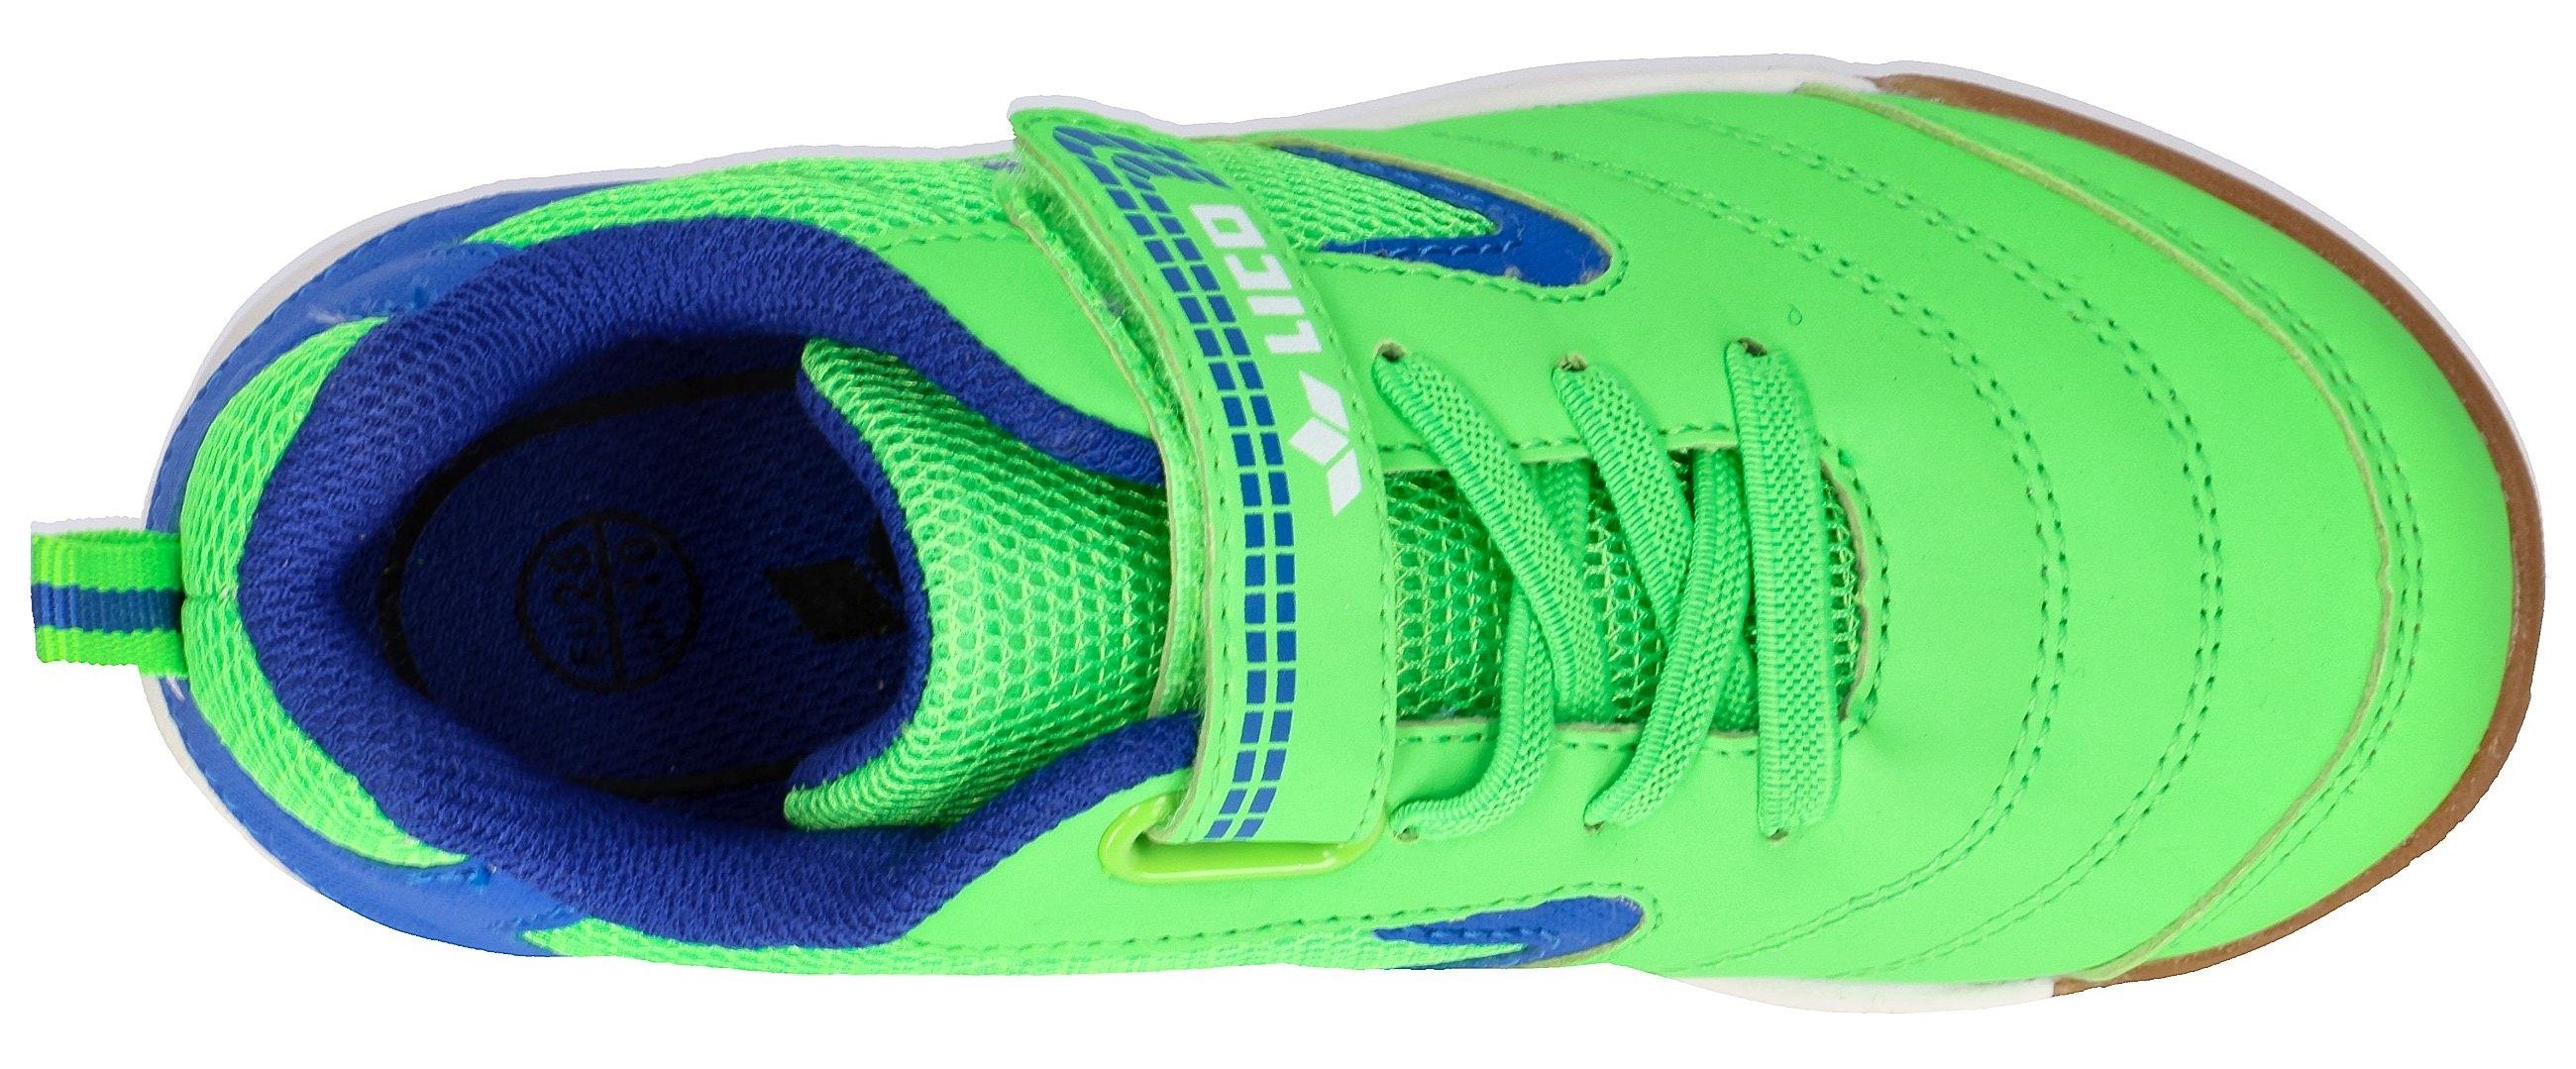 Ari heller Laufsohle VS Lico Sneaker WMS mit grün-blau